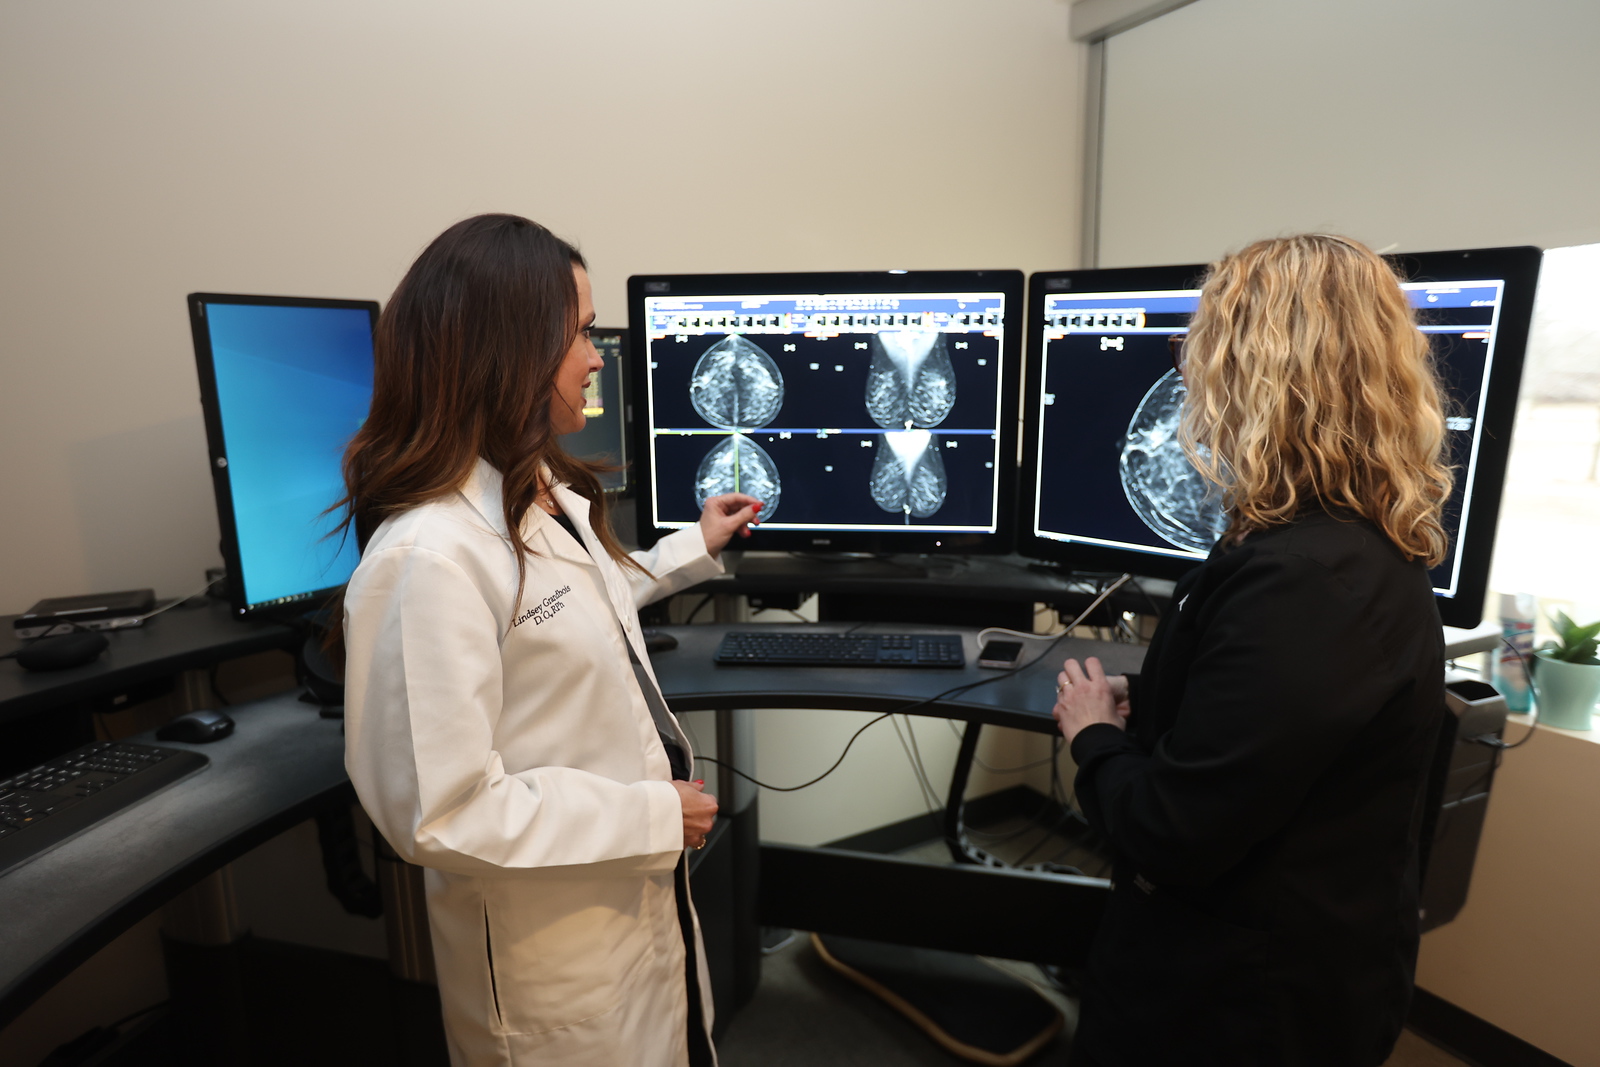 Iowa Radiology Attains NAPBC Accreditation